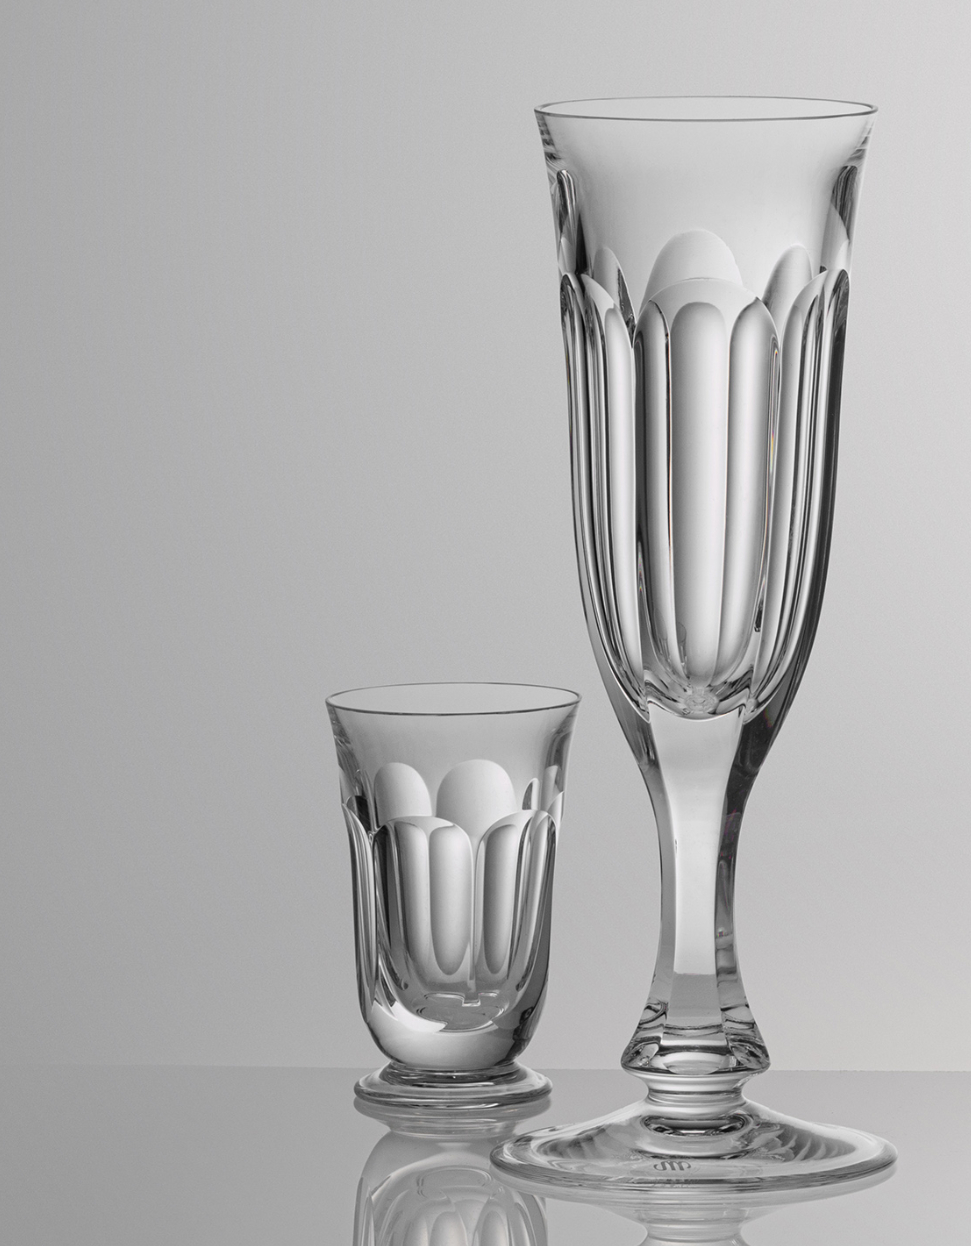 Lady Hamilton spirit glass, 45 ml - gallery #2